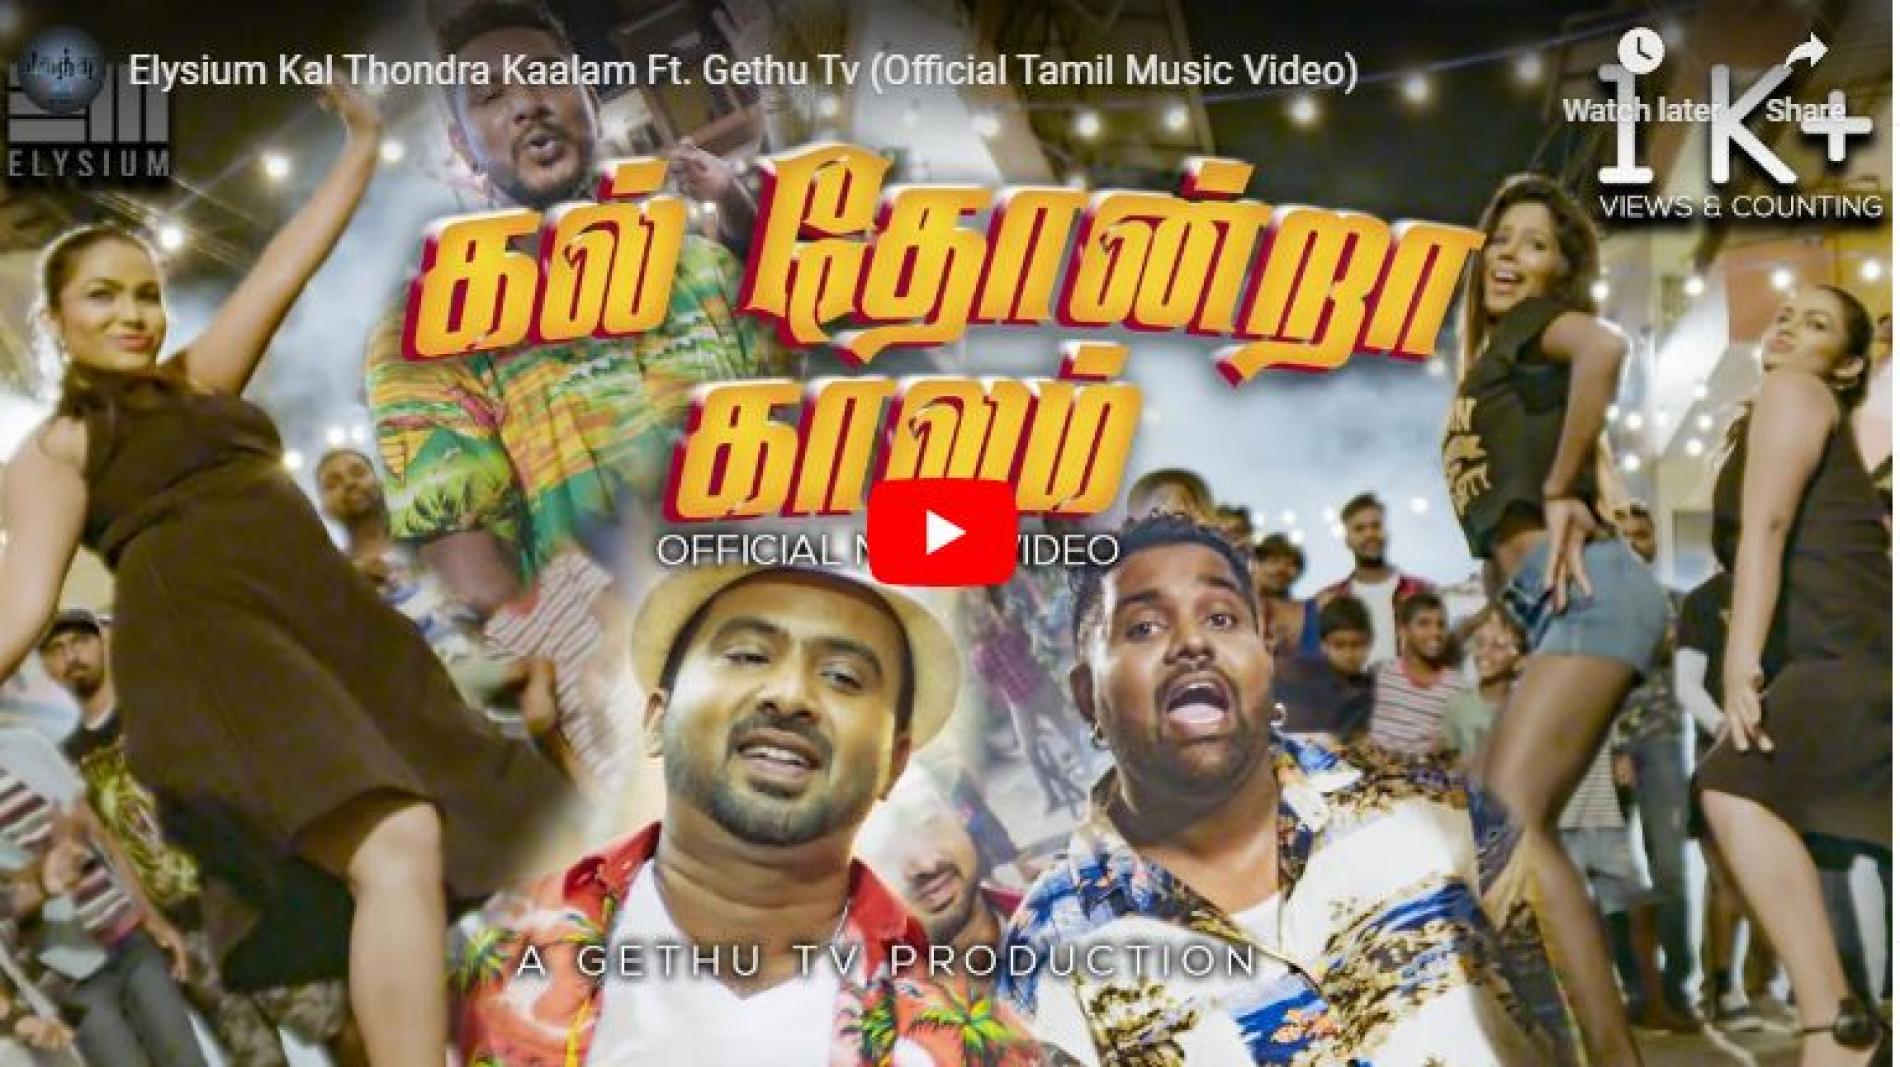 Elysium Kal Thondra Kaalam Ft Gethu Tv (Official Tamil Music Video)